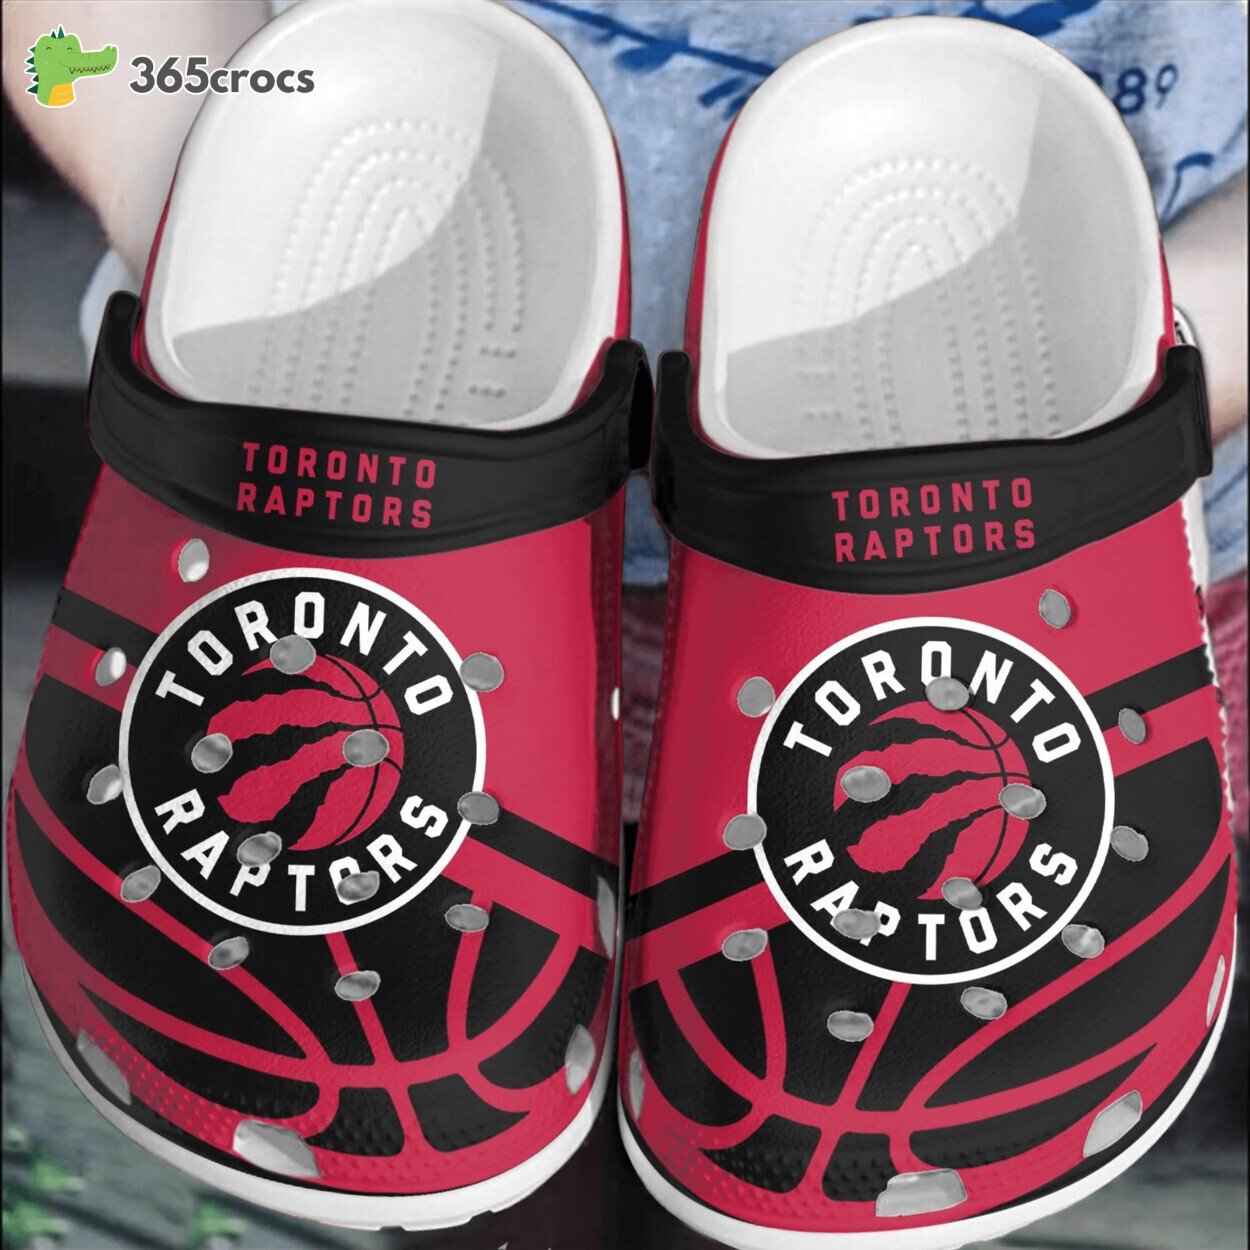 Toronto Raptors Basketball Design Comfortable Crocss Clog Footwear Style